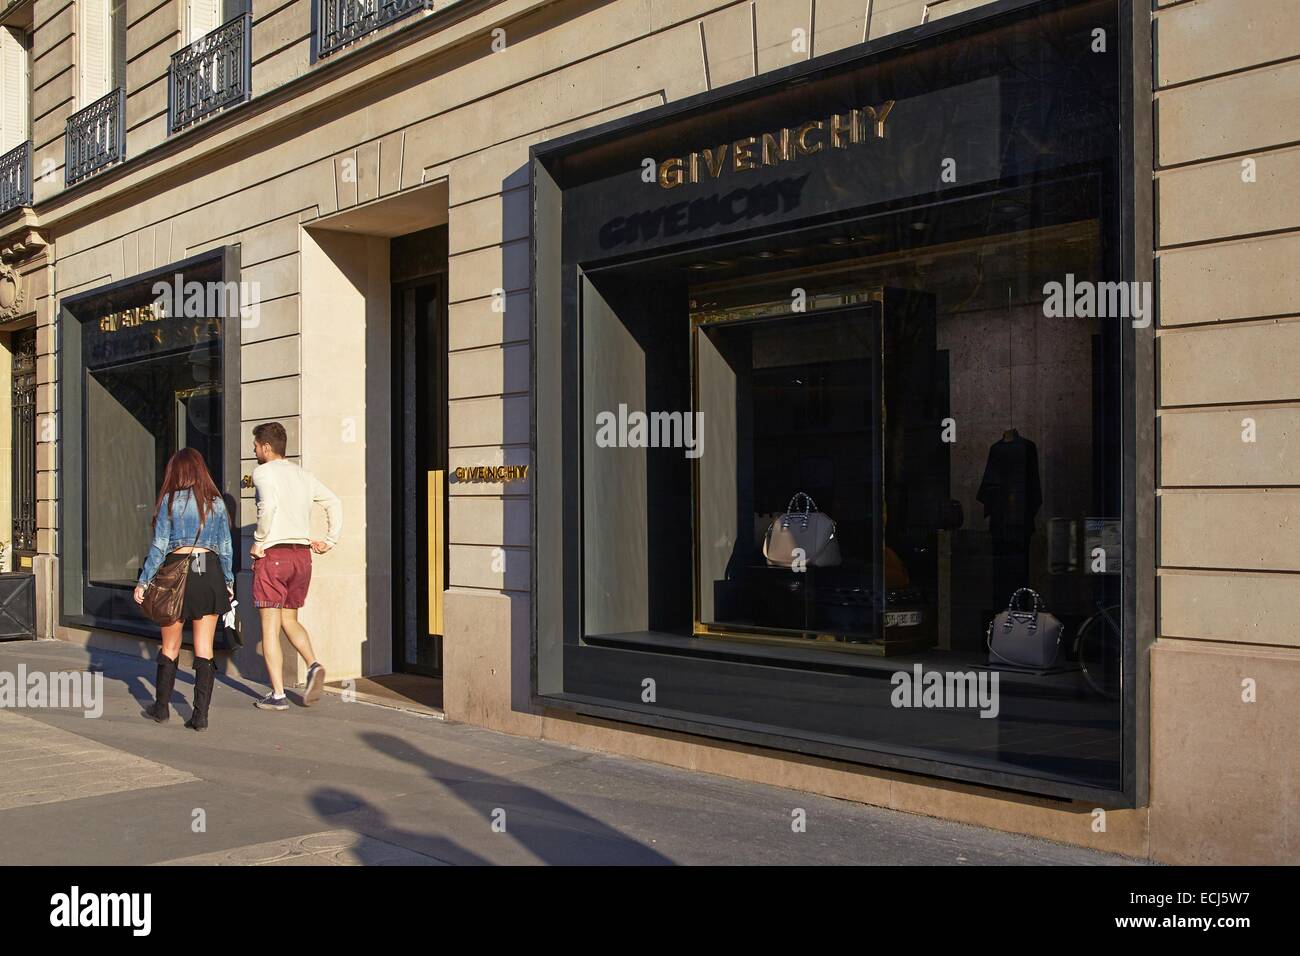 Givenchy sets up shop on Avenue Montaigne